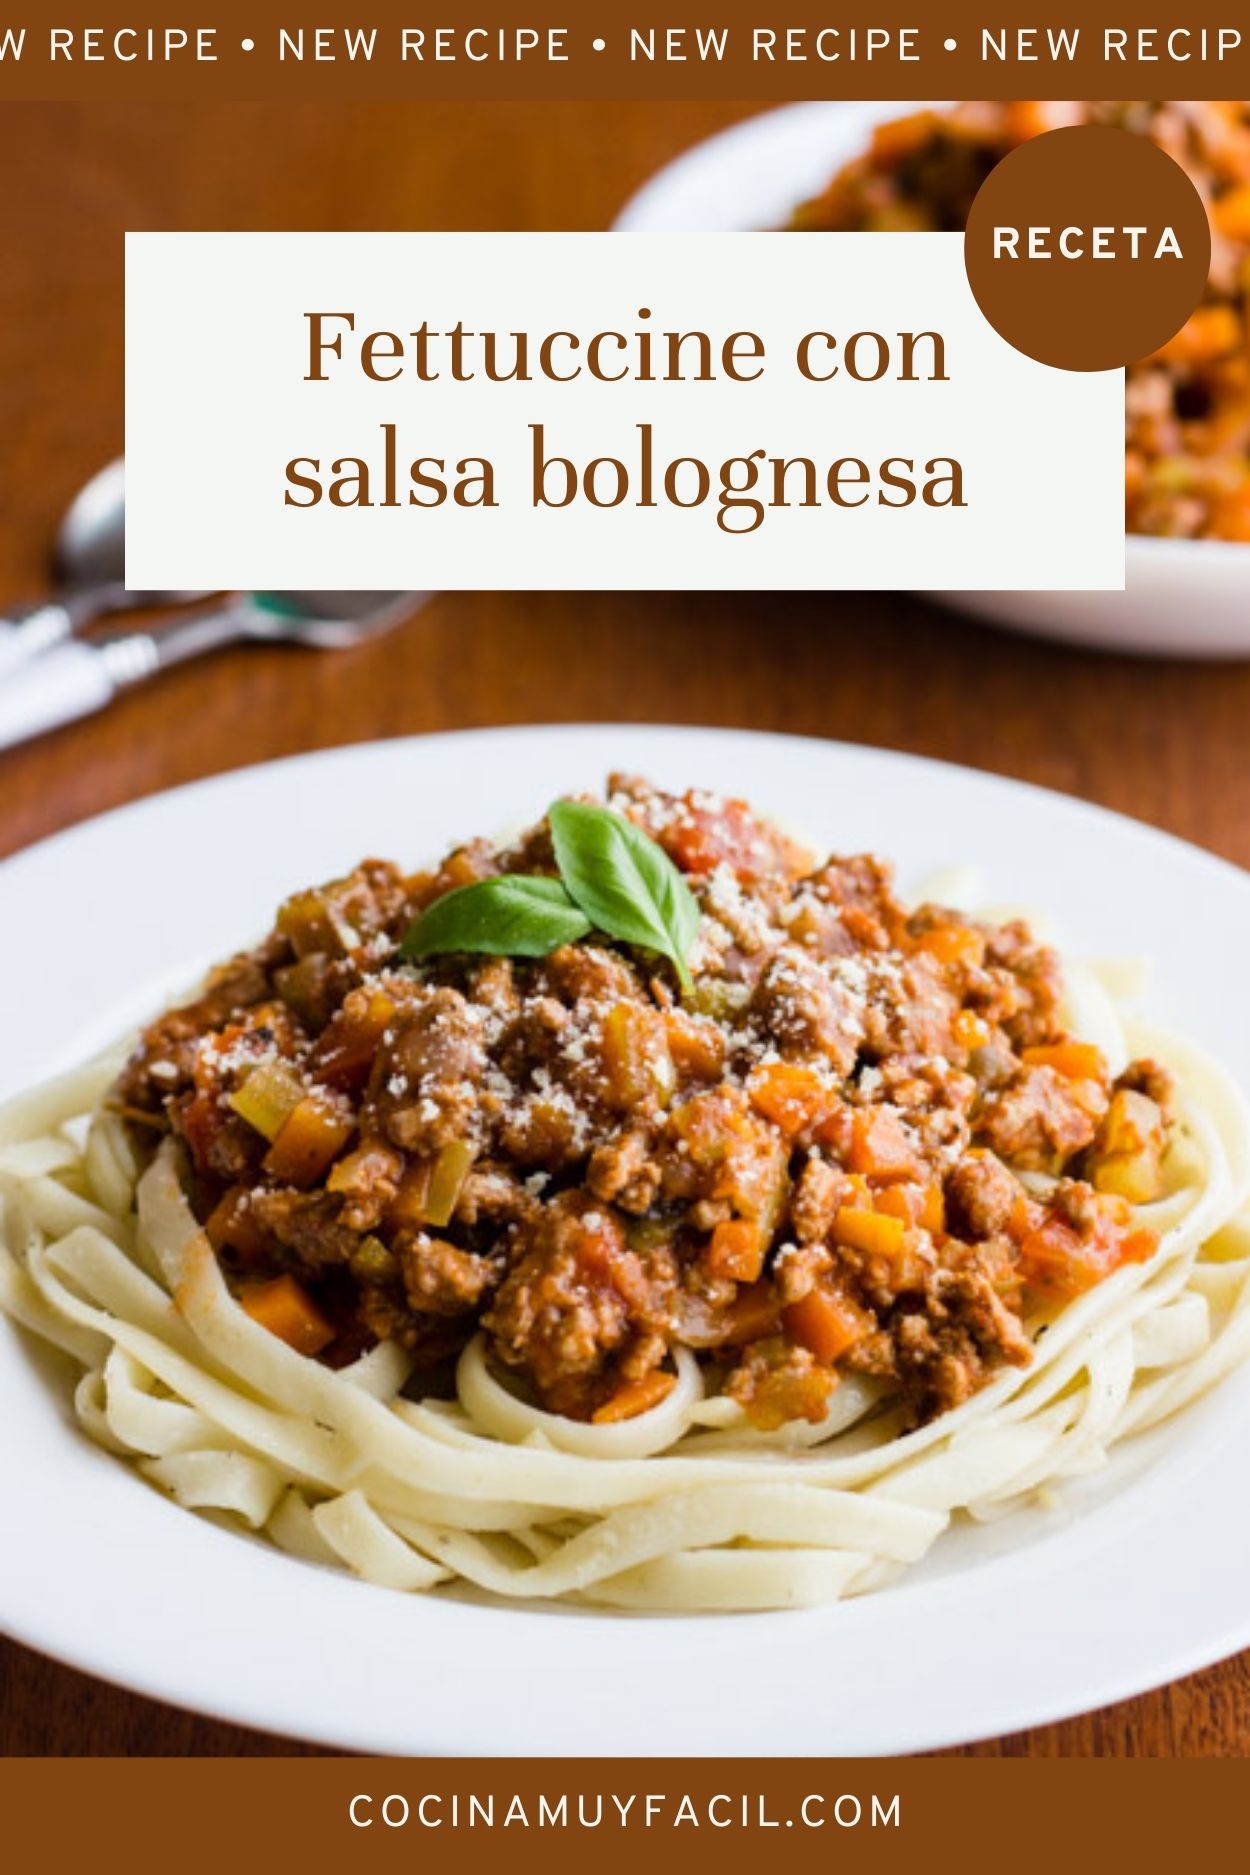 Fettuccine con salsa bolognesa. Receta | cocinamuyfacil.com